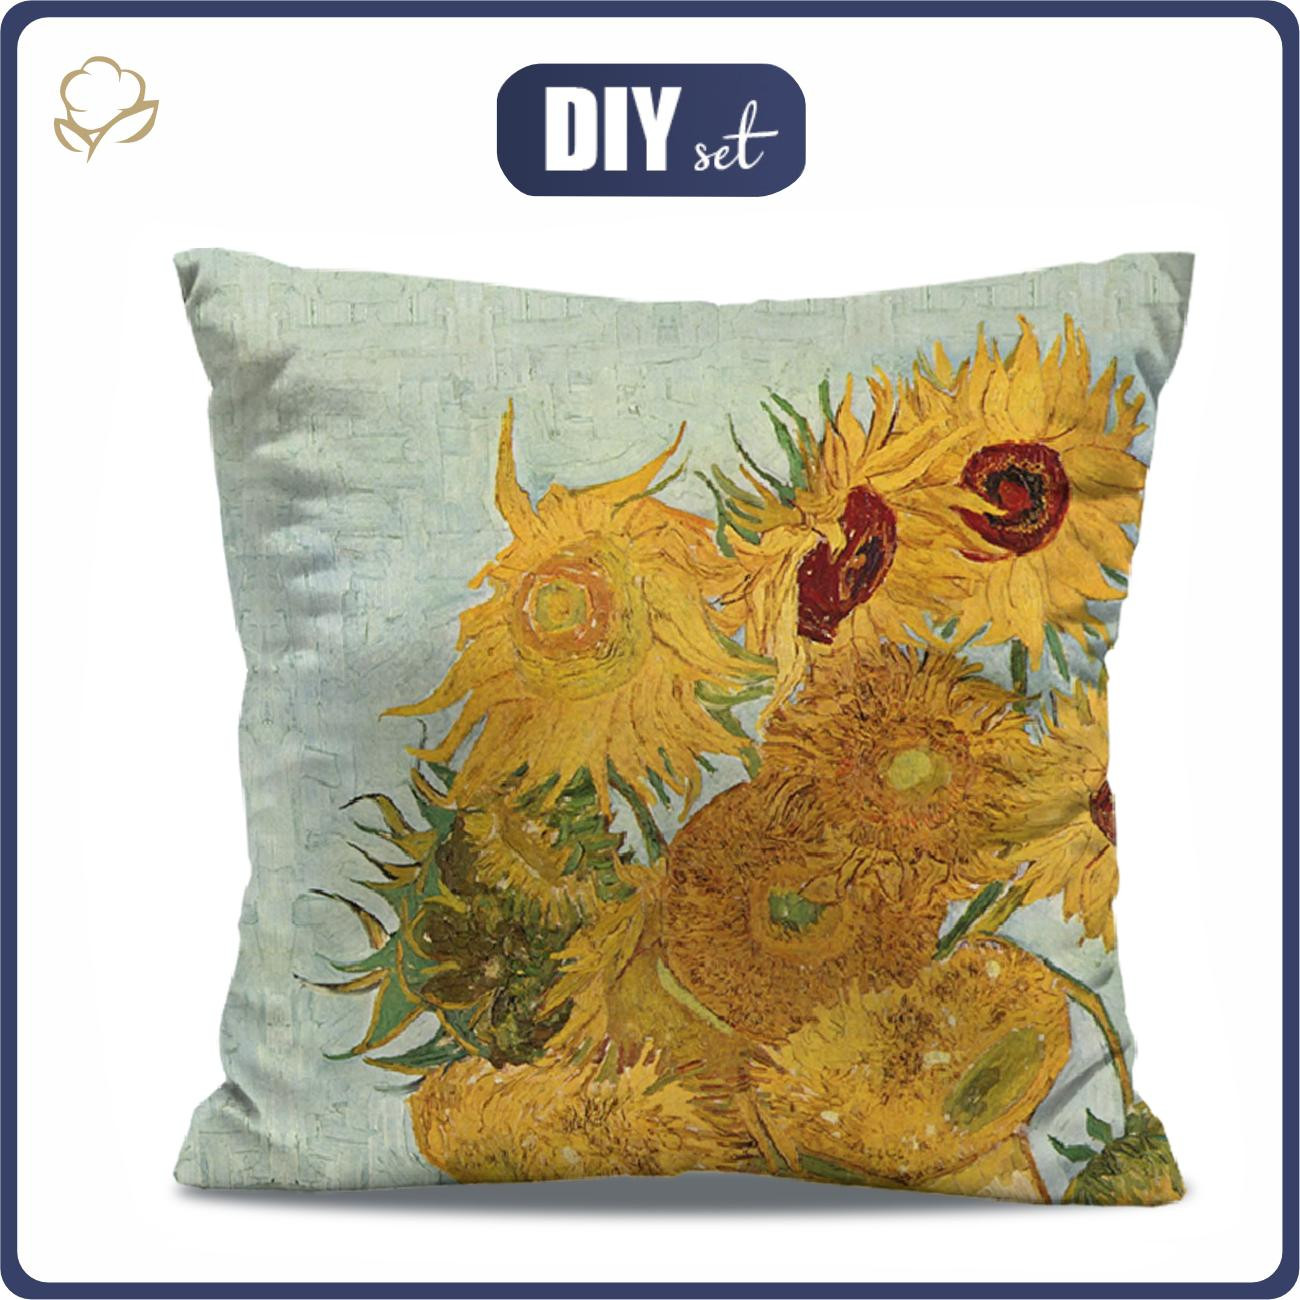 PILLOW 45X45 - SUNFLOWERS (Vincent van Gogh) - Waterproof woven fabric - sewing set